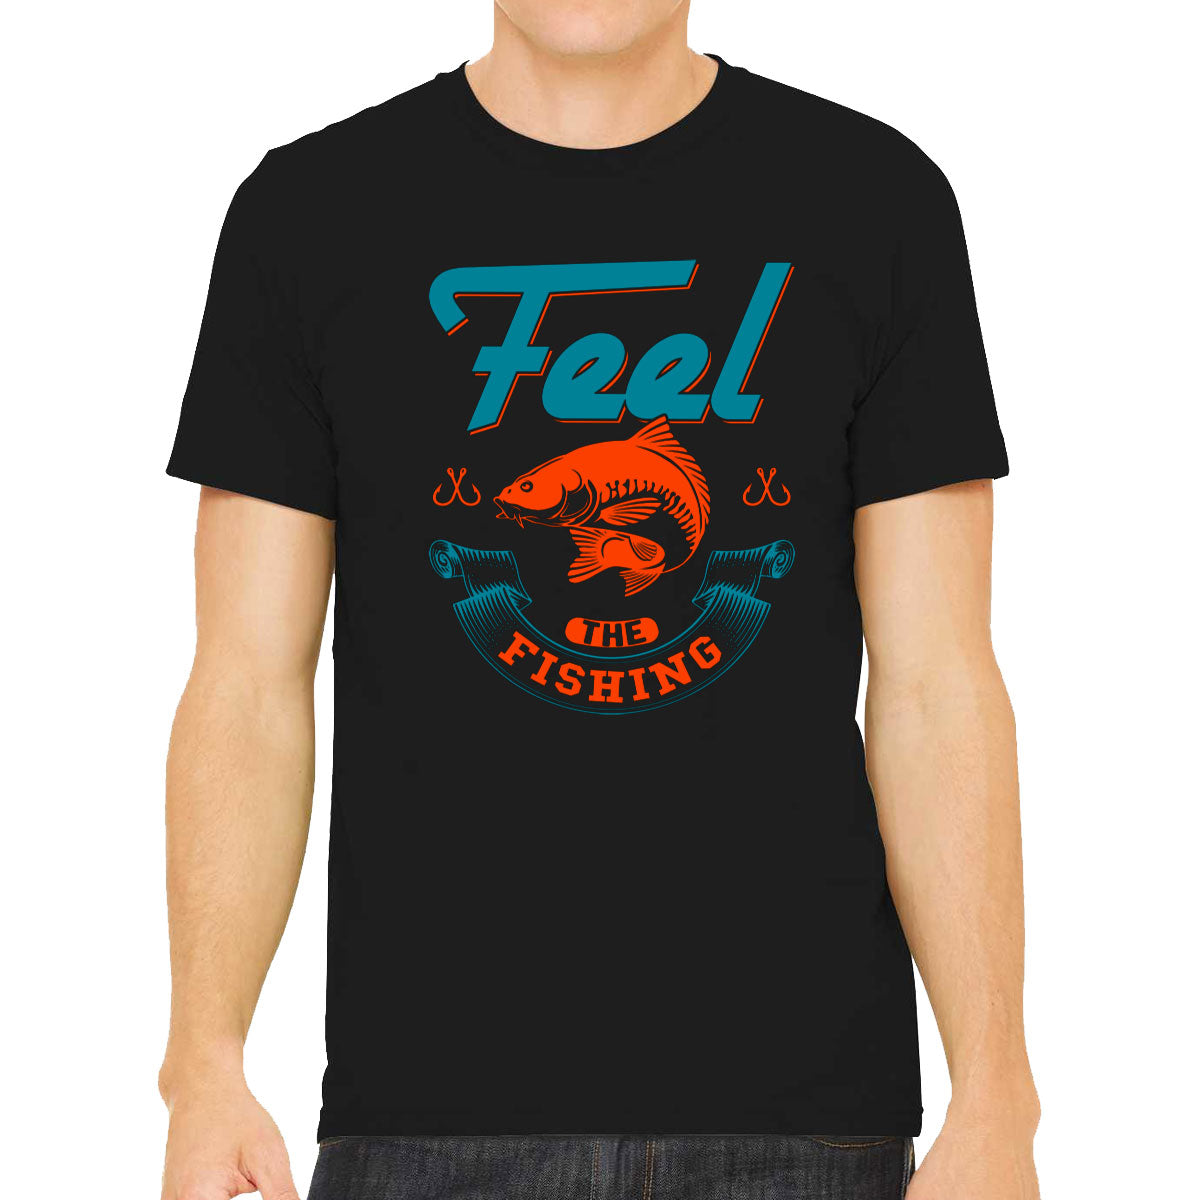 Feel The Fishing Men's T-shirt